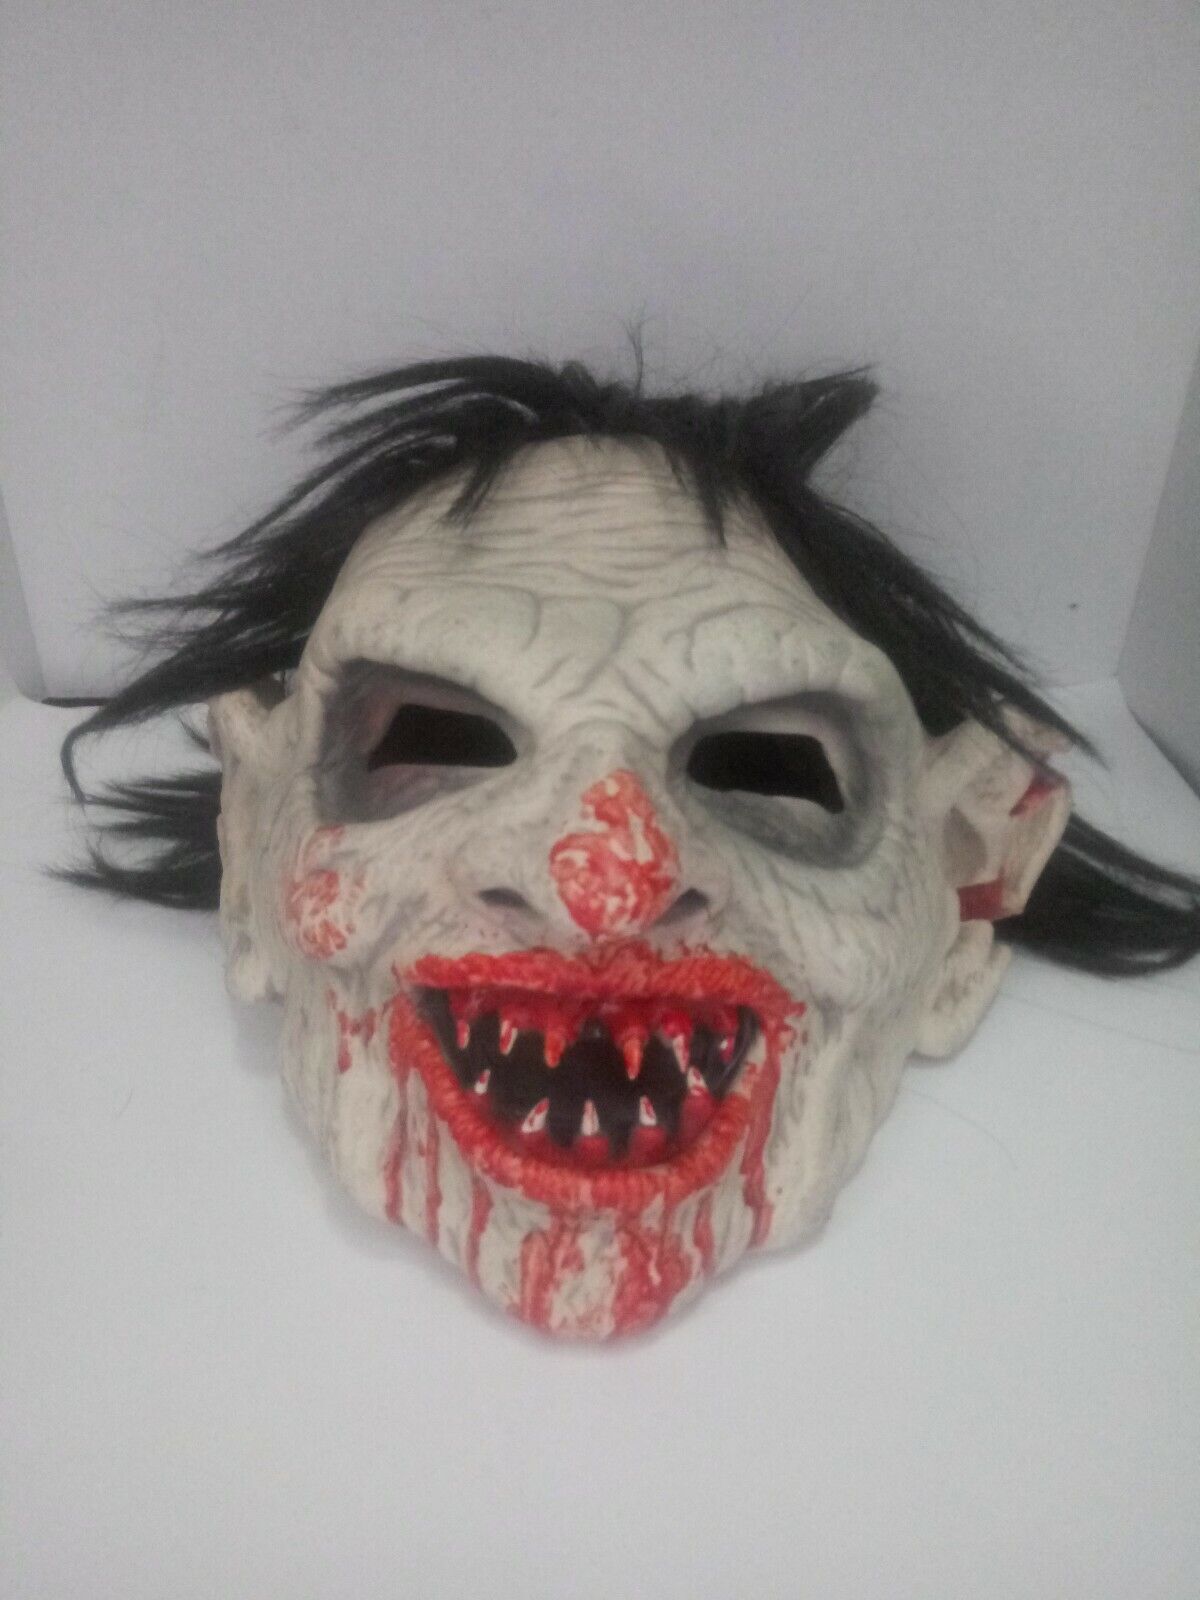 Zagone Studios - Yummy - Bloody Zombie Handmade Latex Mask made